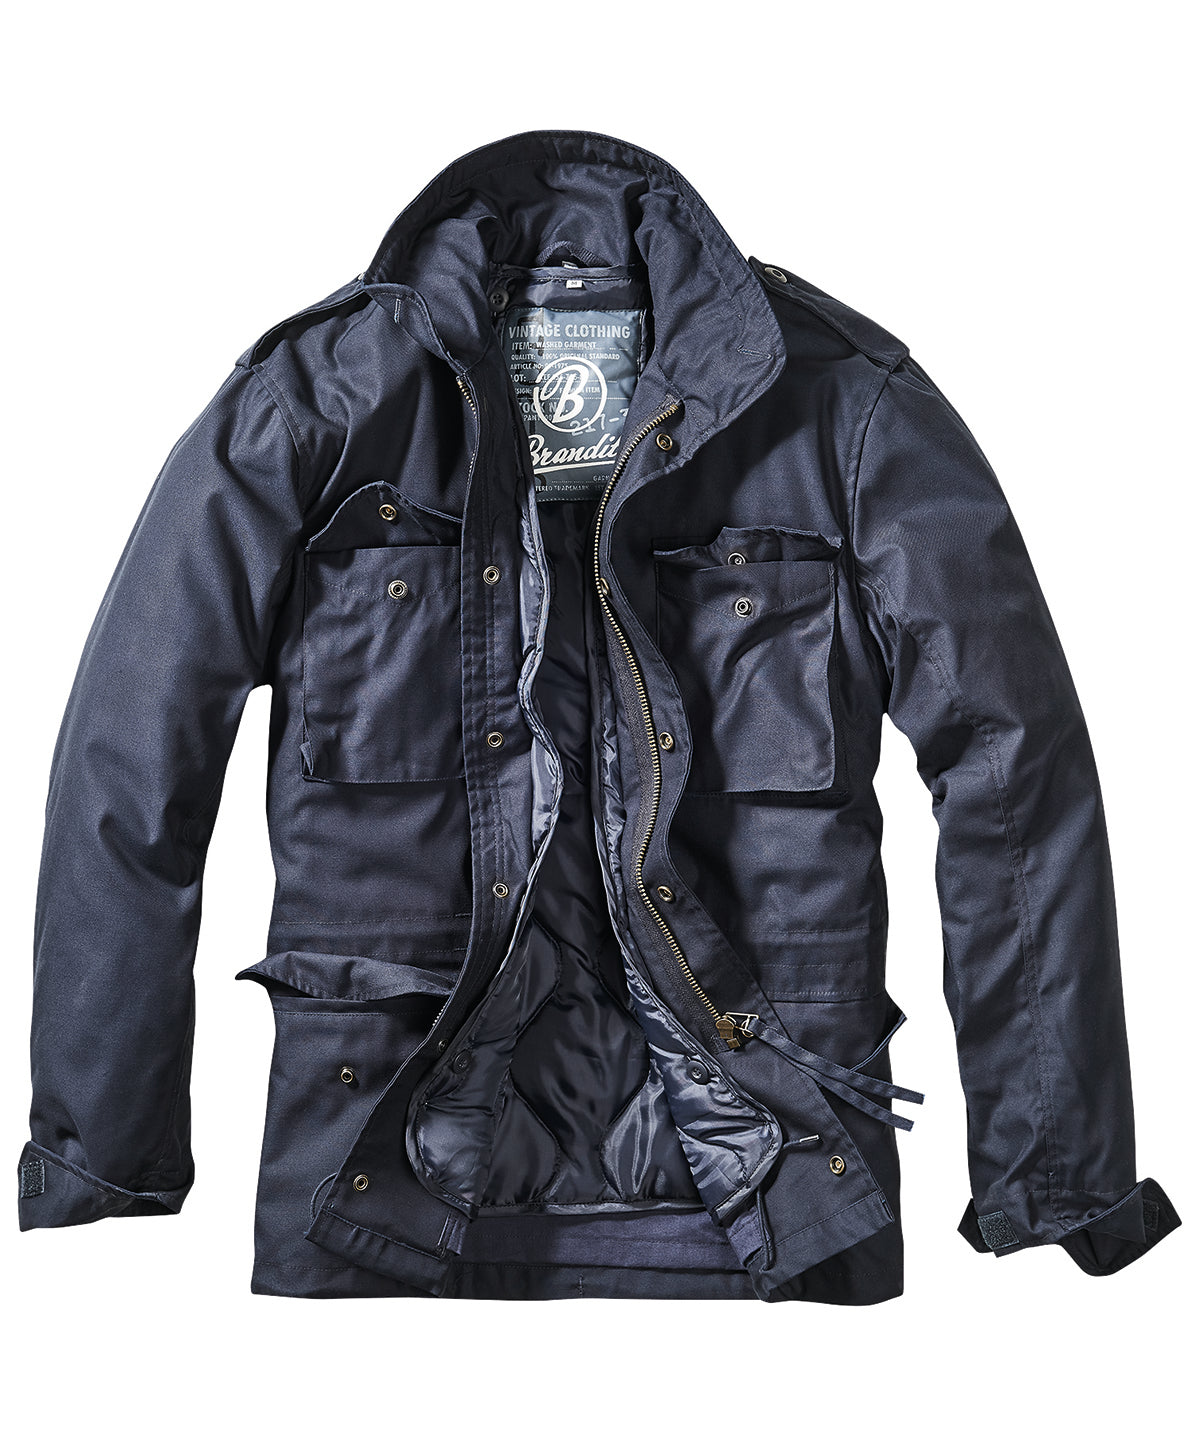 Personalised Jackets - Black Build Your Brandit M65 jacket